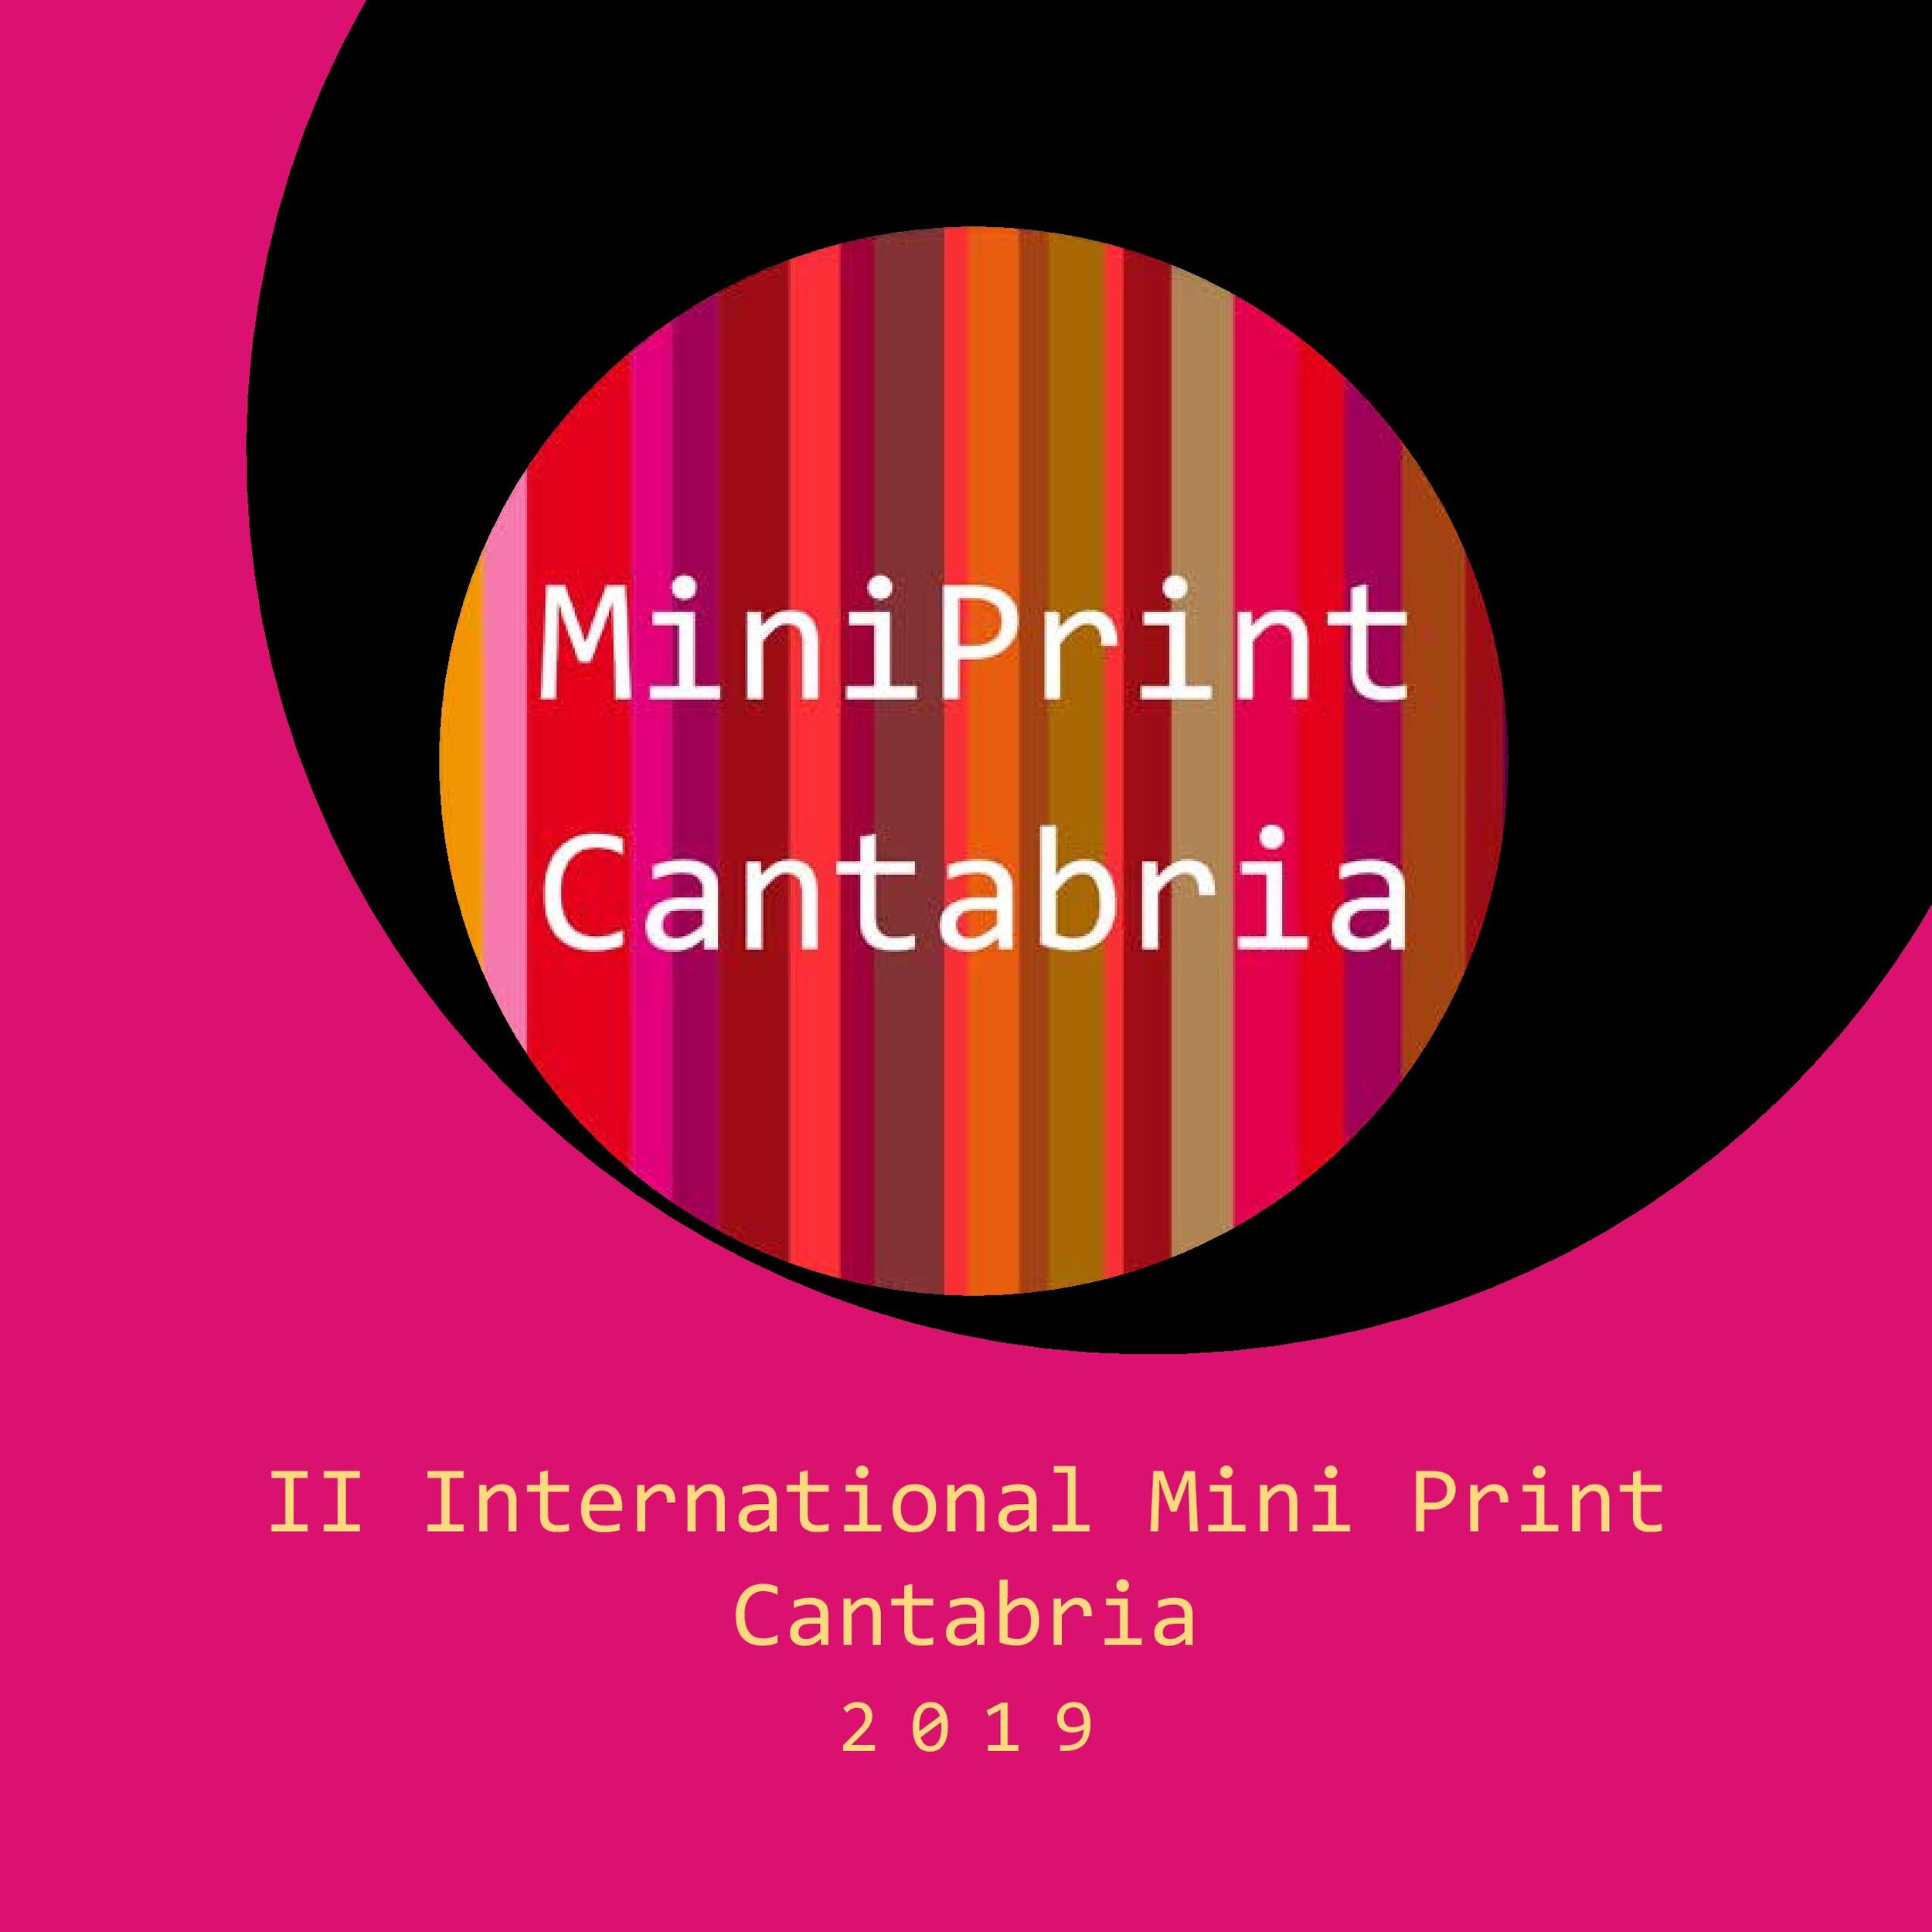 Catalogo mini print 2019 baja-page-001.jpg